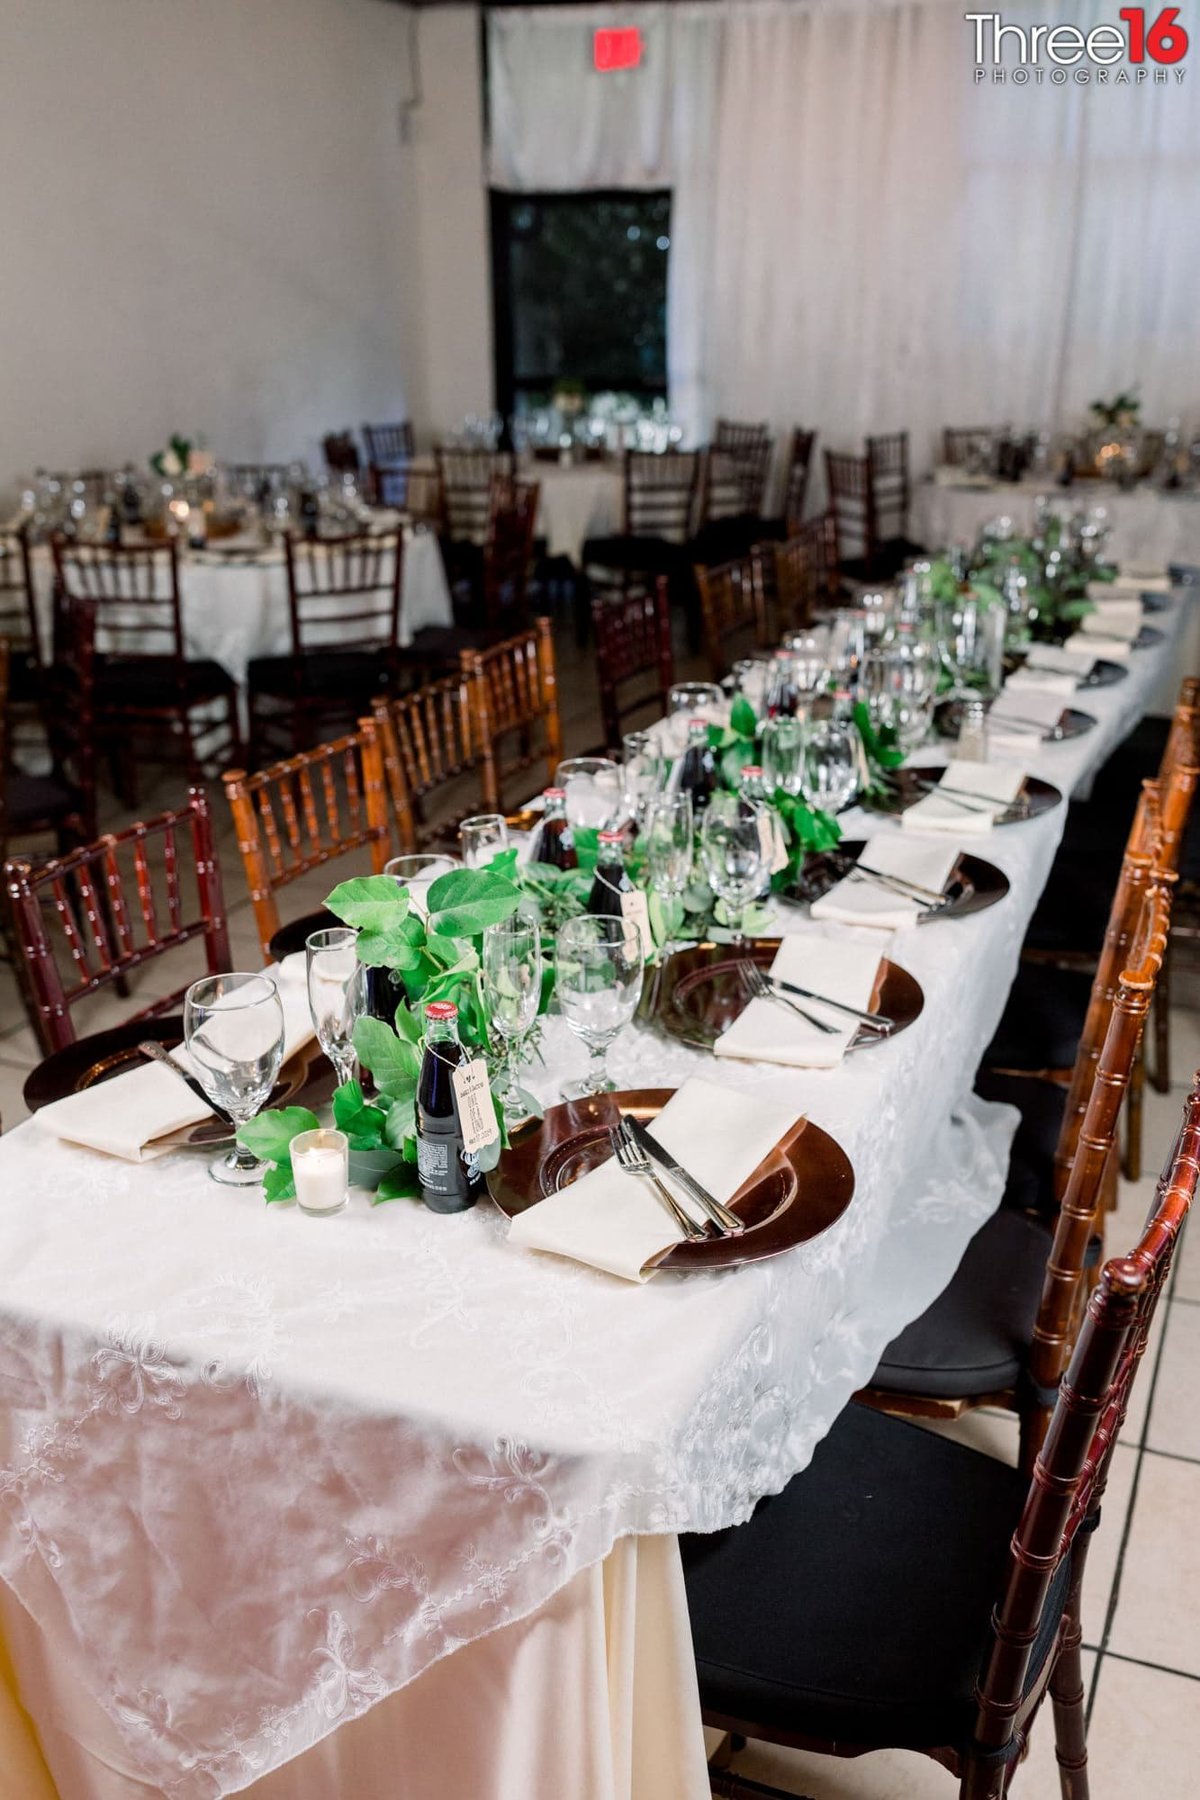 Table setup for a wedding reception